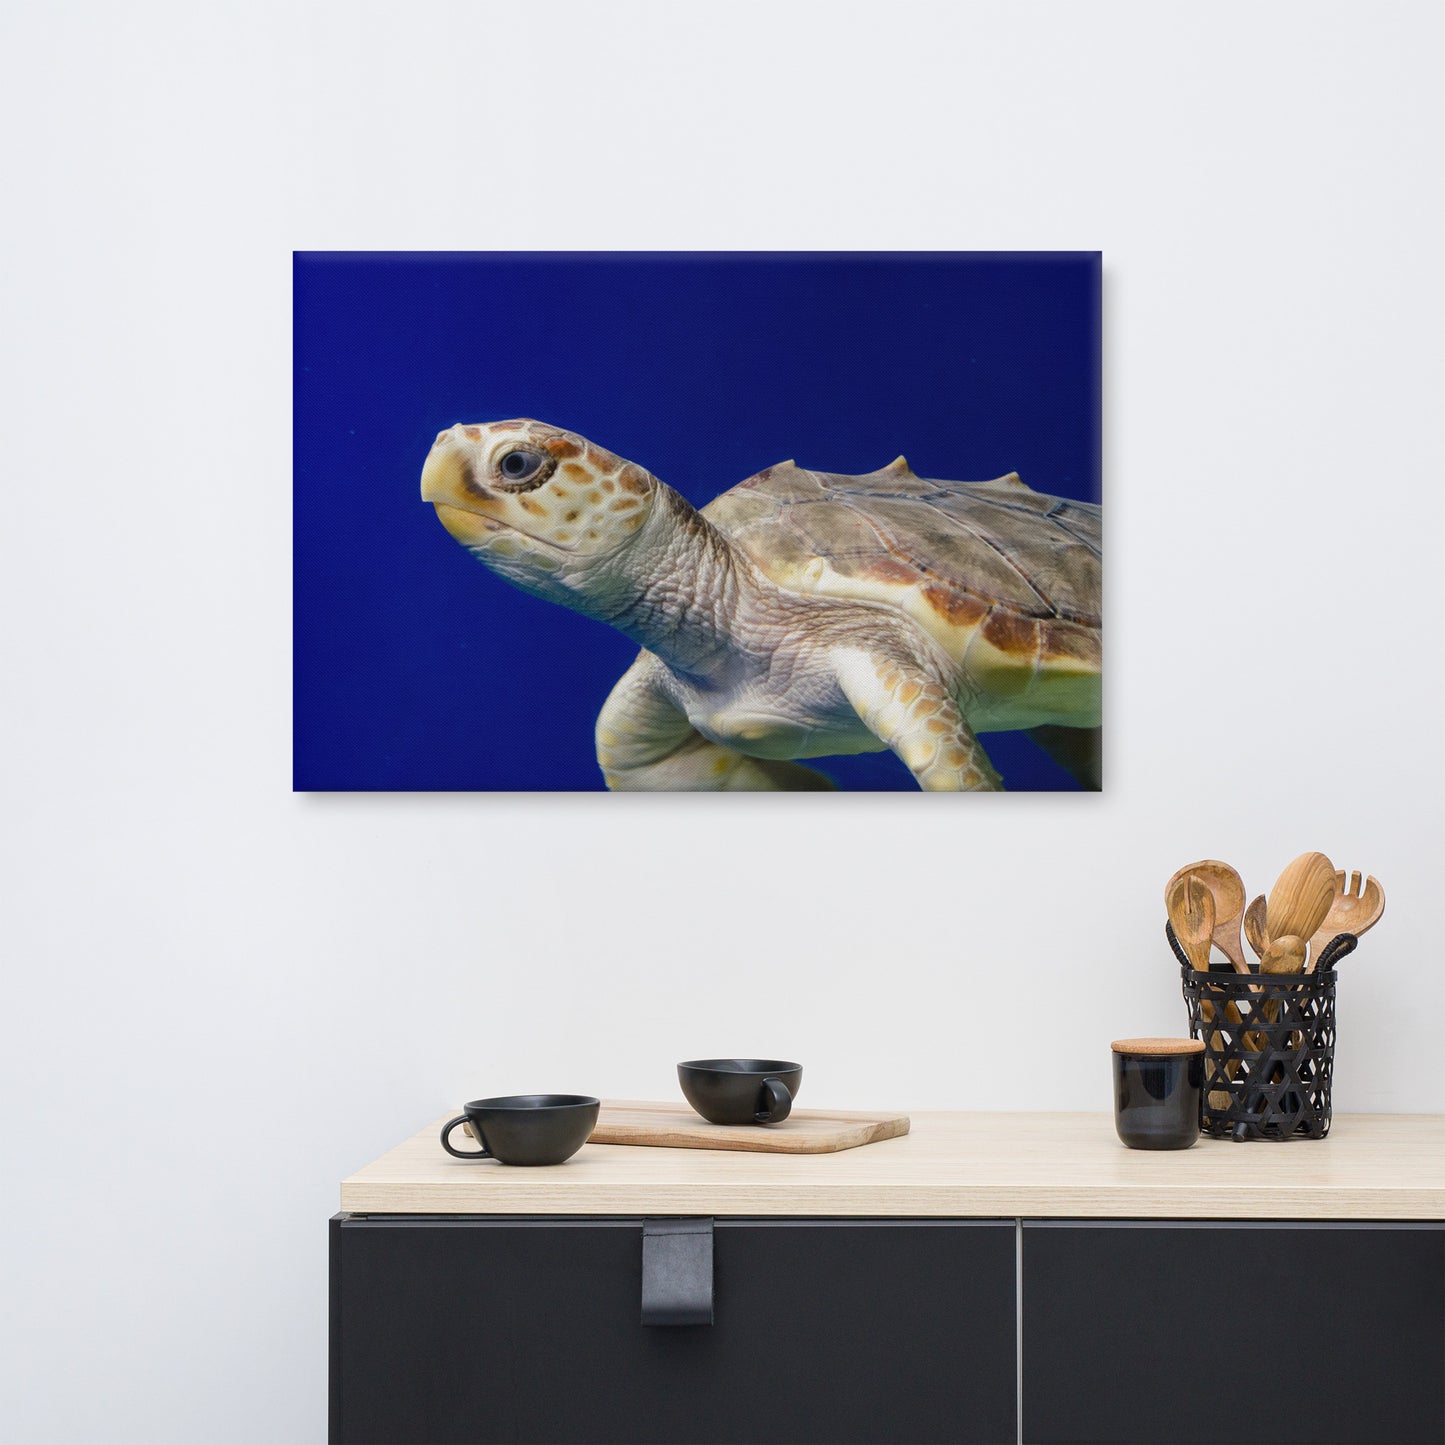 Sea Turtle 2 Animal / Wildlife Photograph Canvas Wall Art Prints